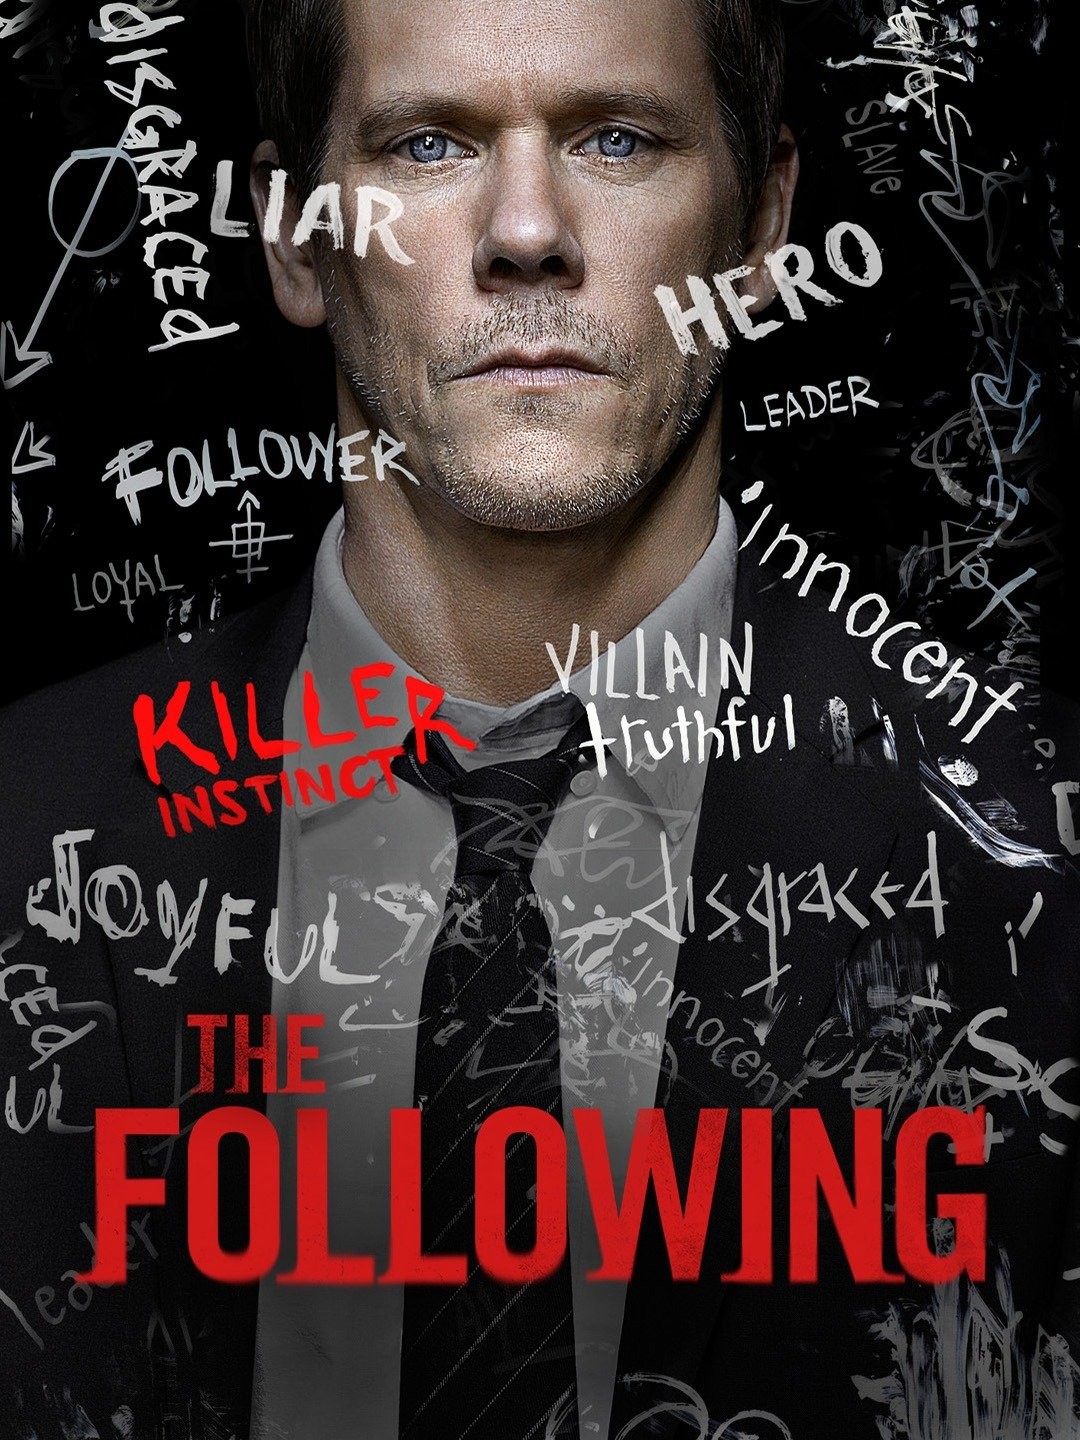 The Following': Série criminal com Kevin Bacon já está disponível